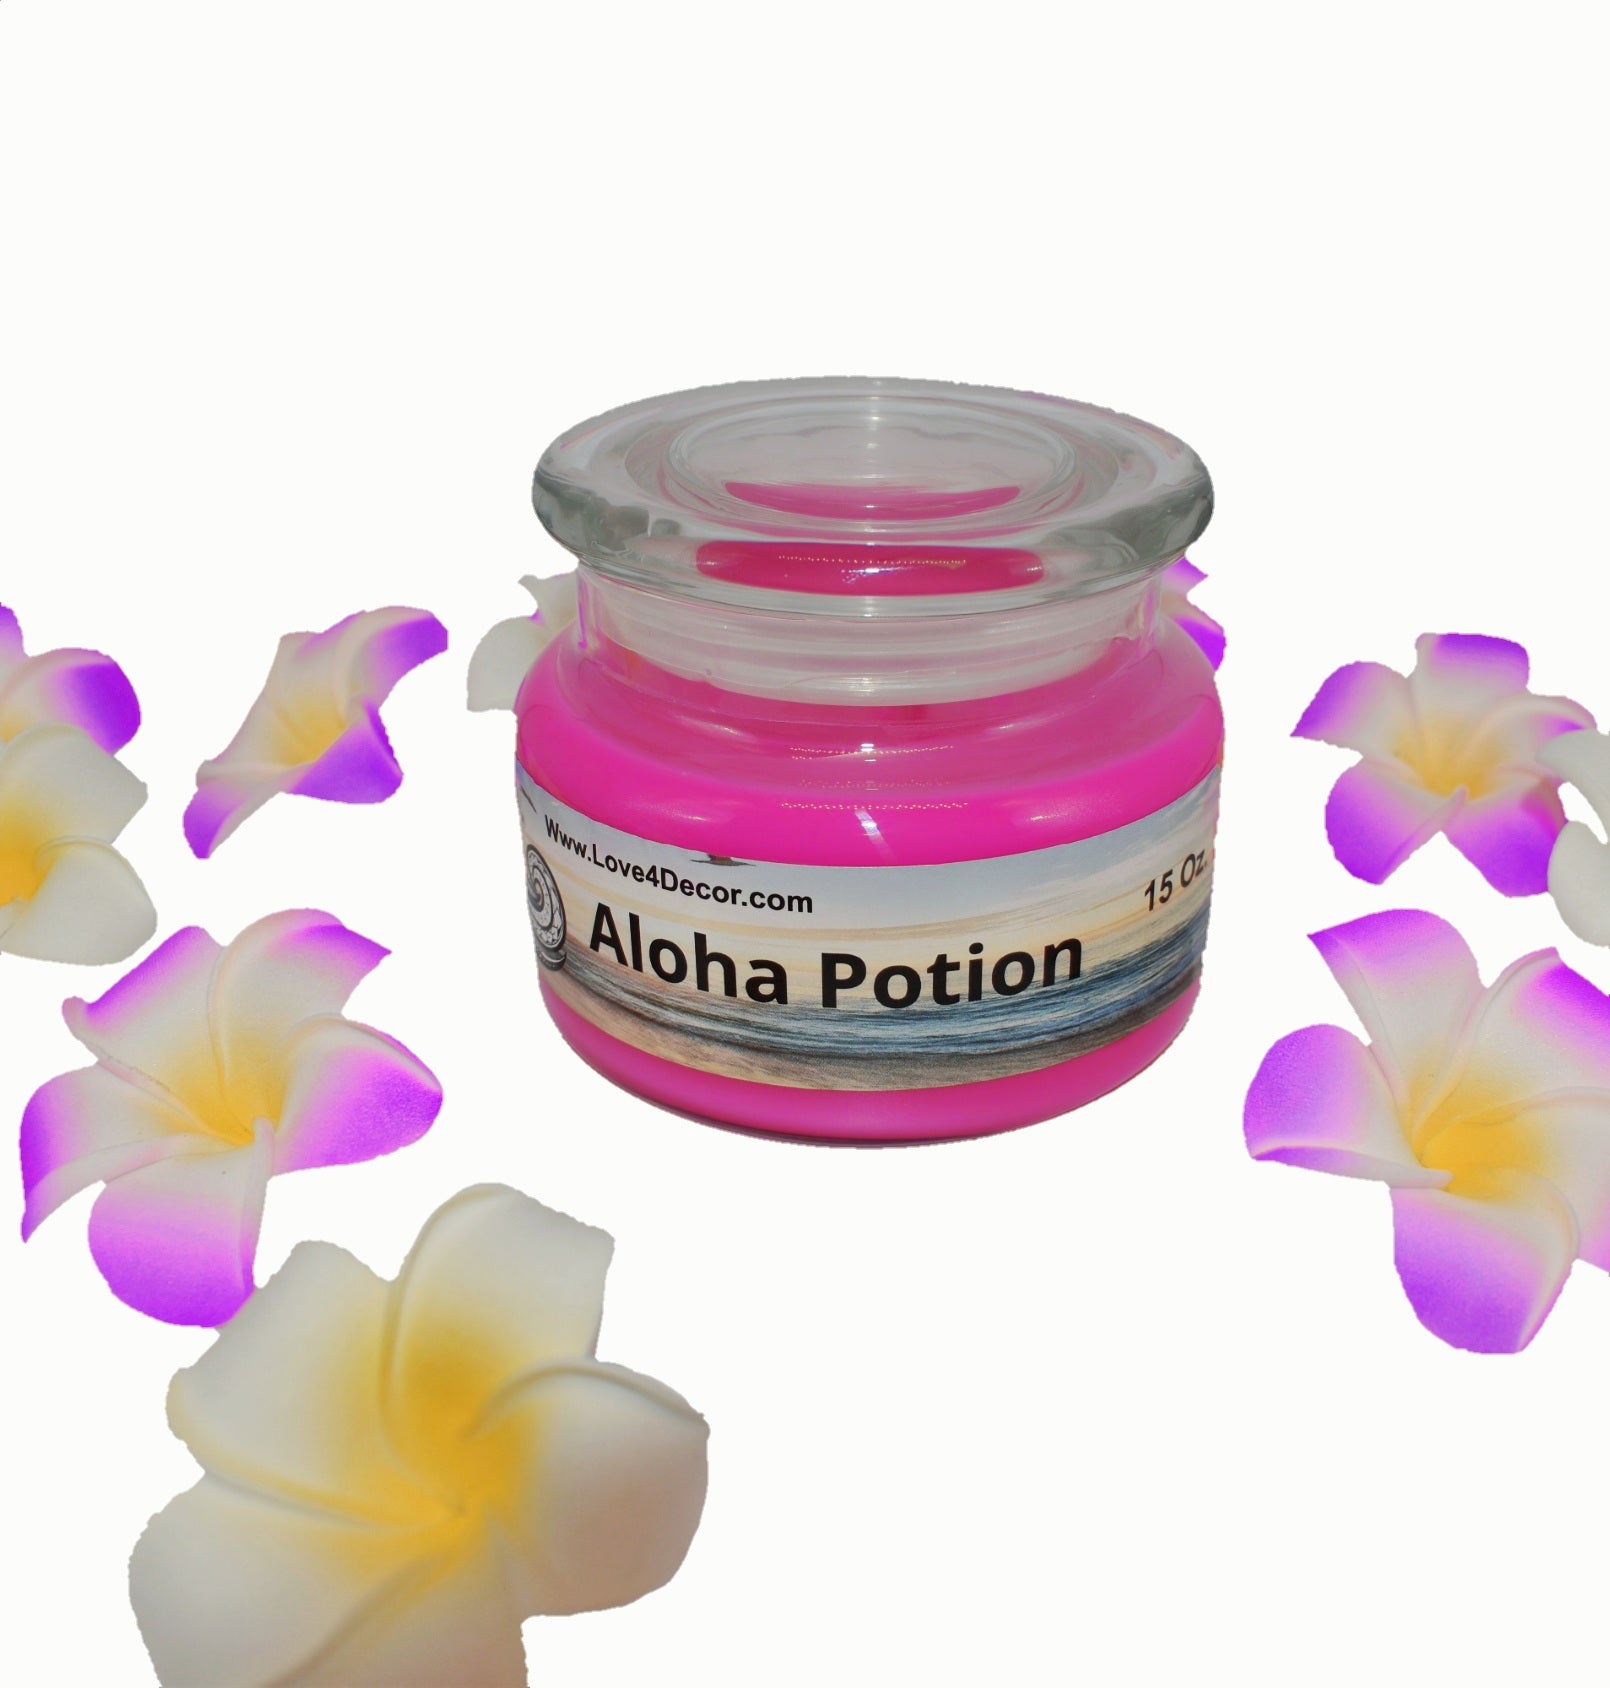 The Aloha Potion Scent